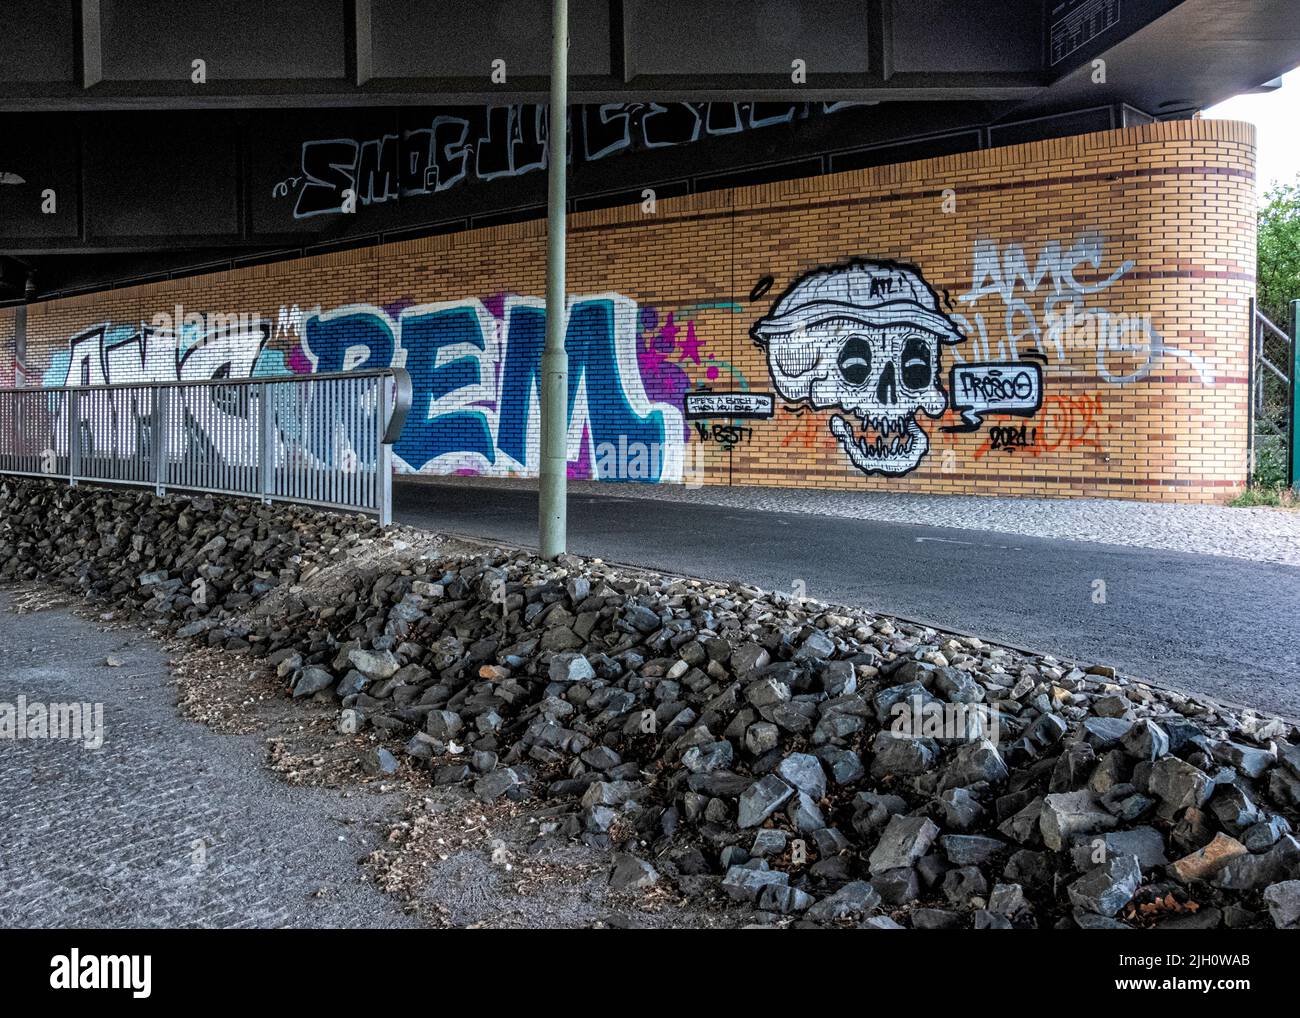 Ernst Ruska Ufer under graffiti covered bridge of the 113 motorway in Johannisthal, Treptow-Köpenick, Berlin Stock Photo